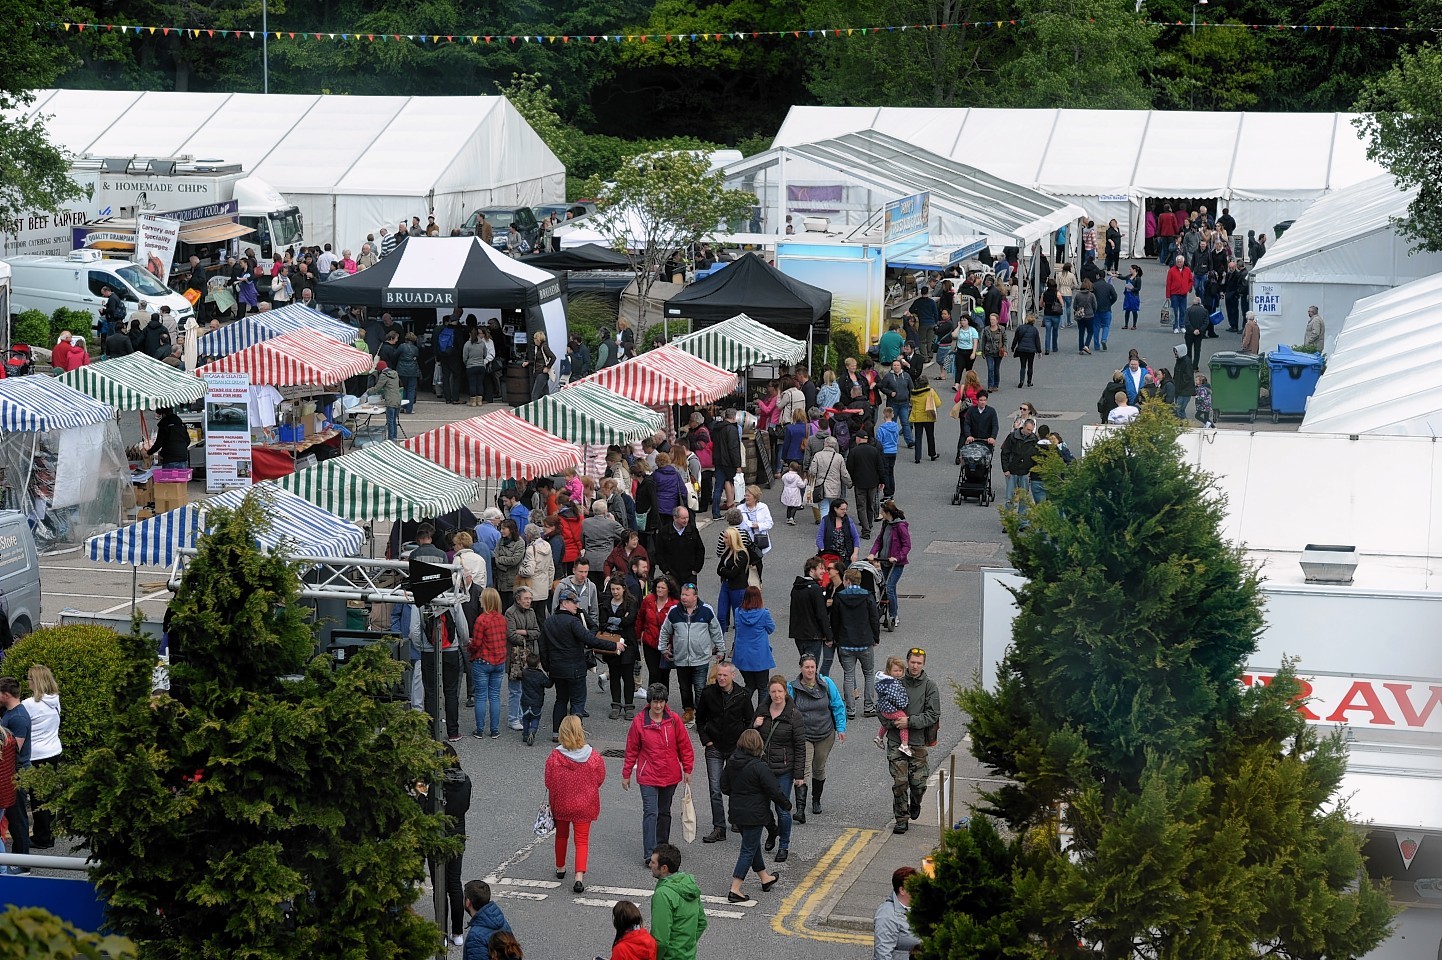 Taste of Grampian food and drink festival 2015 held at Thainstone, Aberdeenshire.